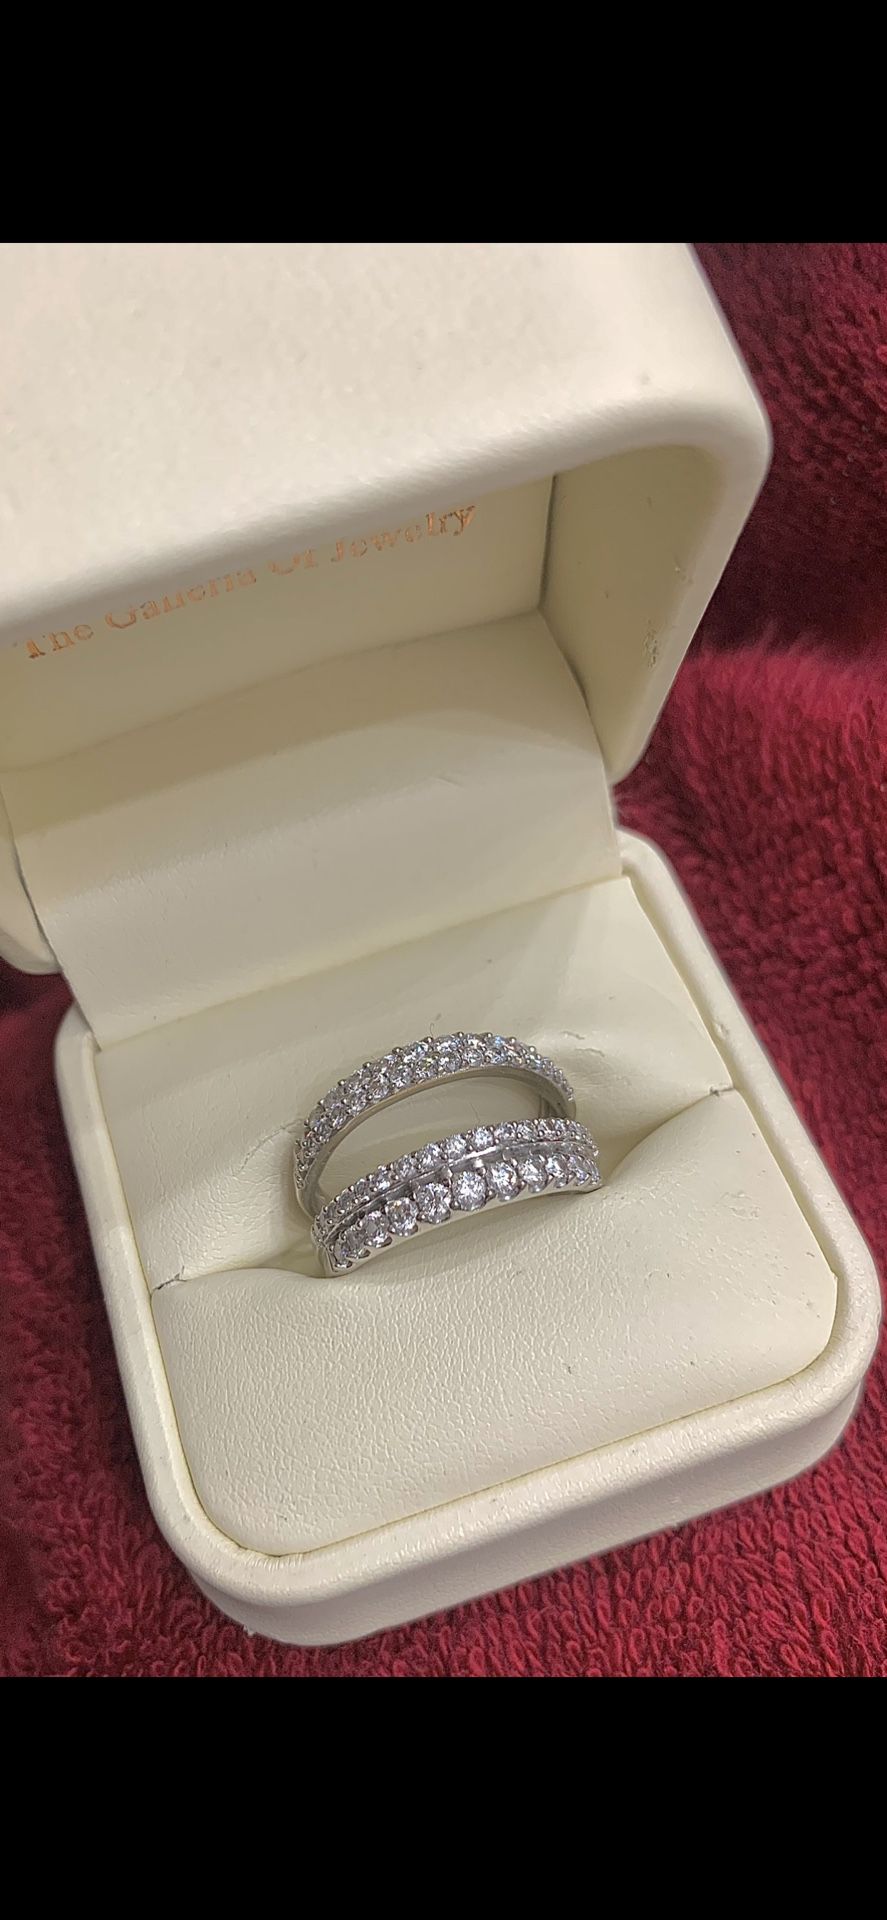 Diamond engagement ring AND enhancer